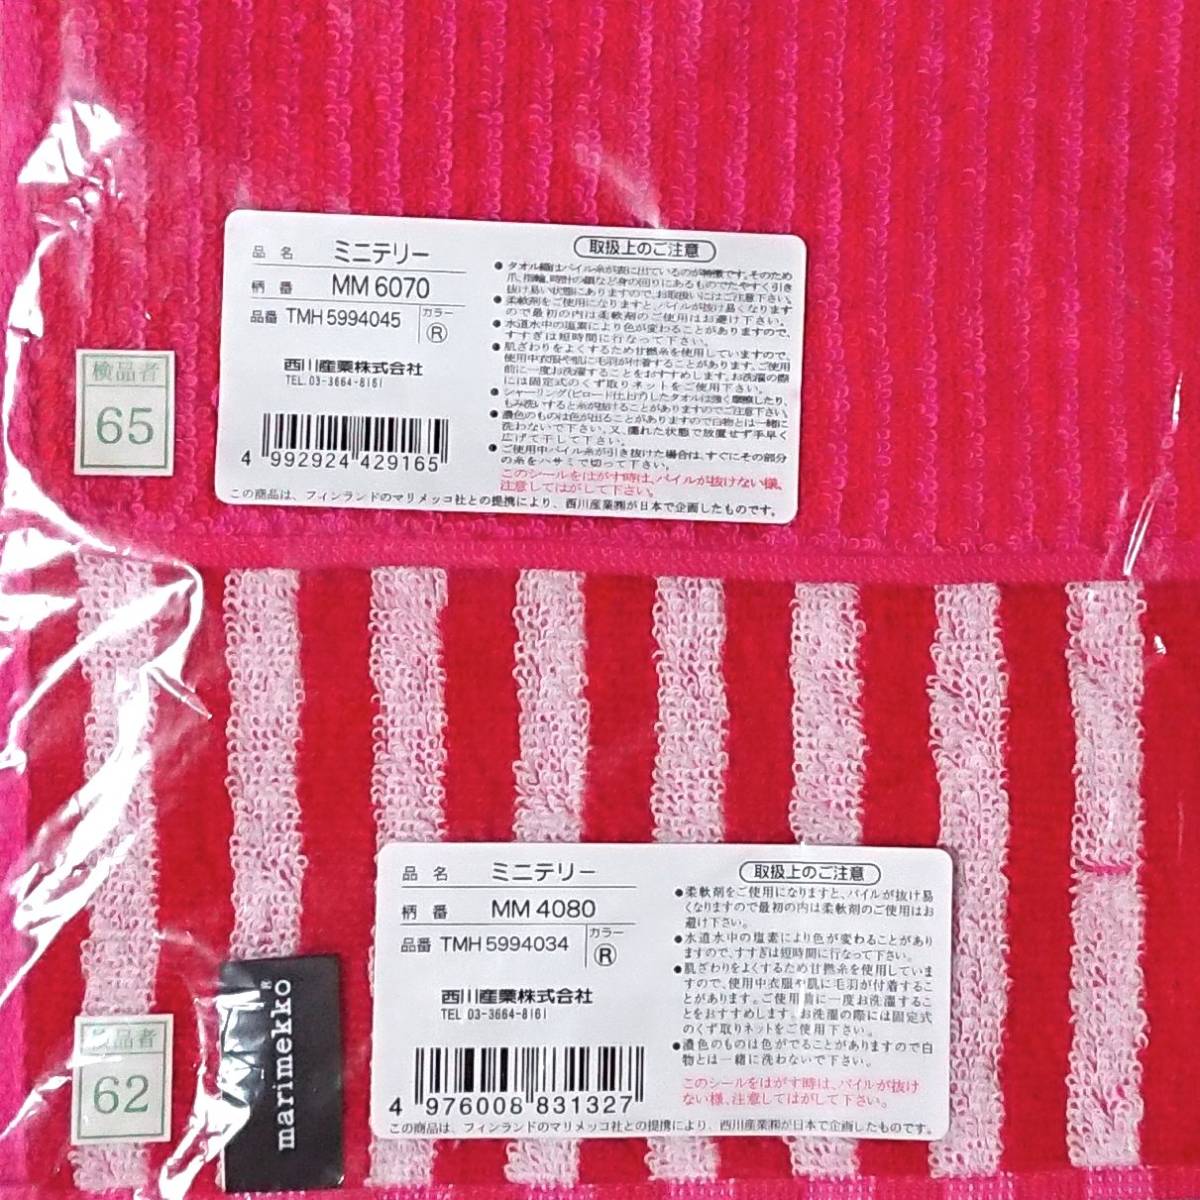  Marimekko Mini ta Horta oru handkerchie hand towel 2 pieces set red red group stripe marimekko new goods unused 